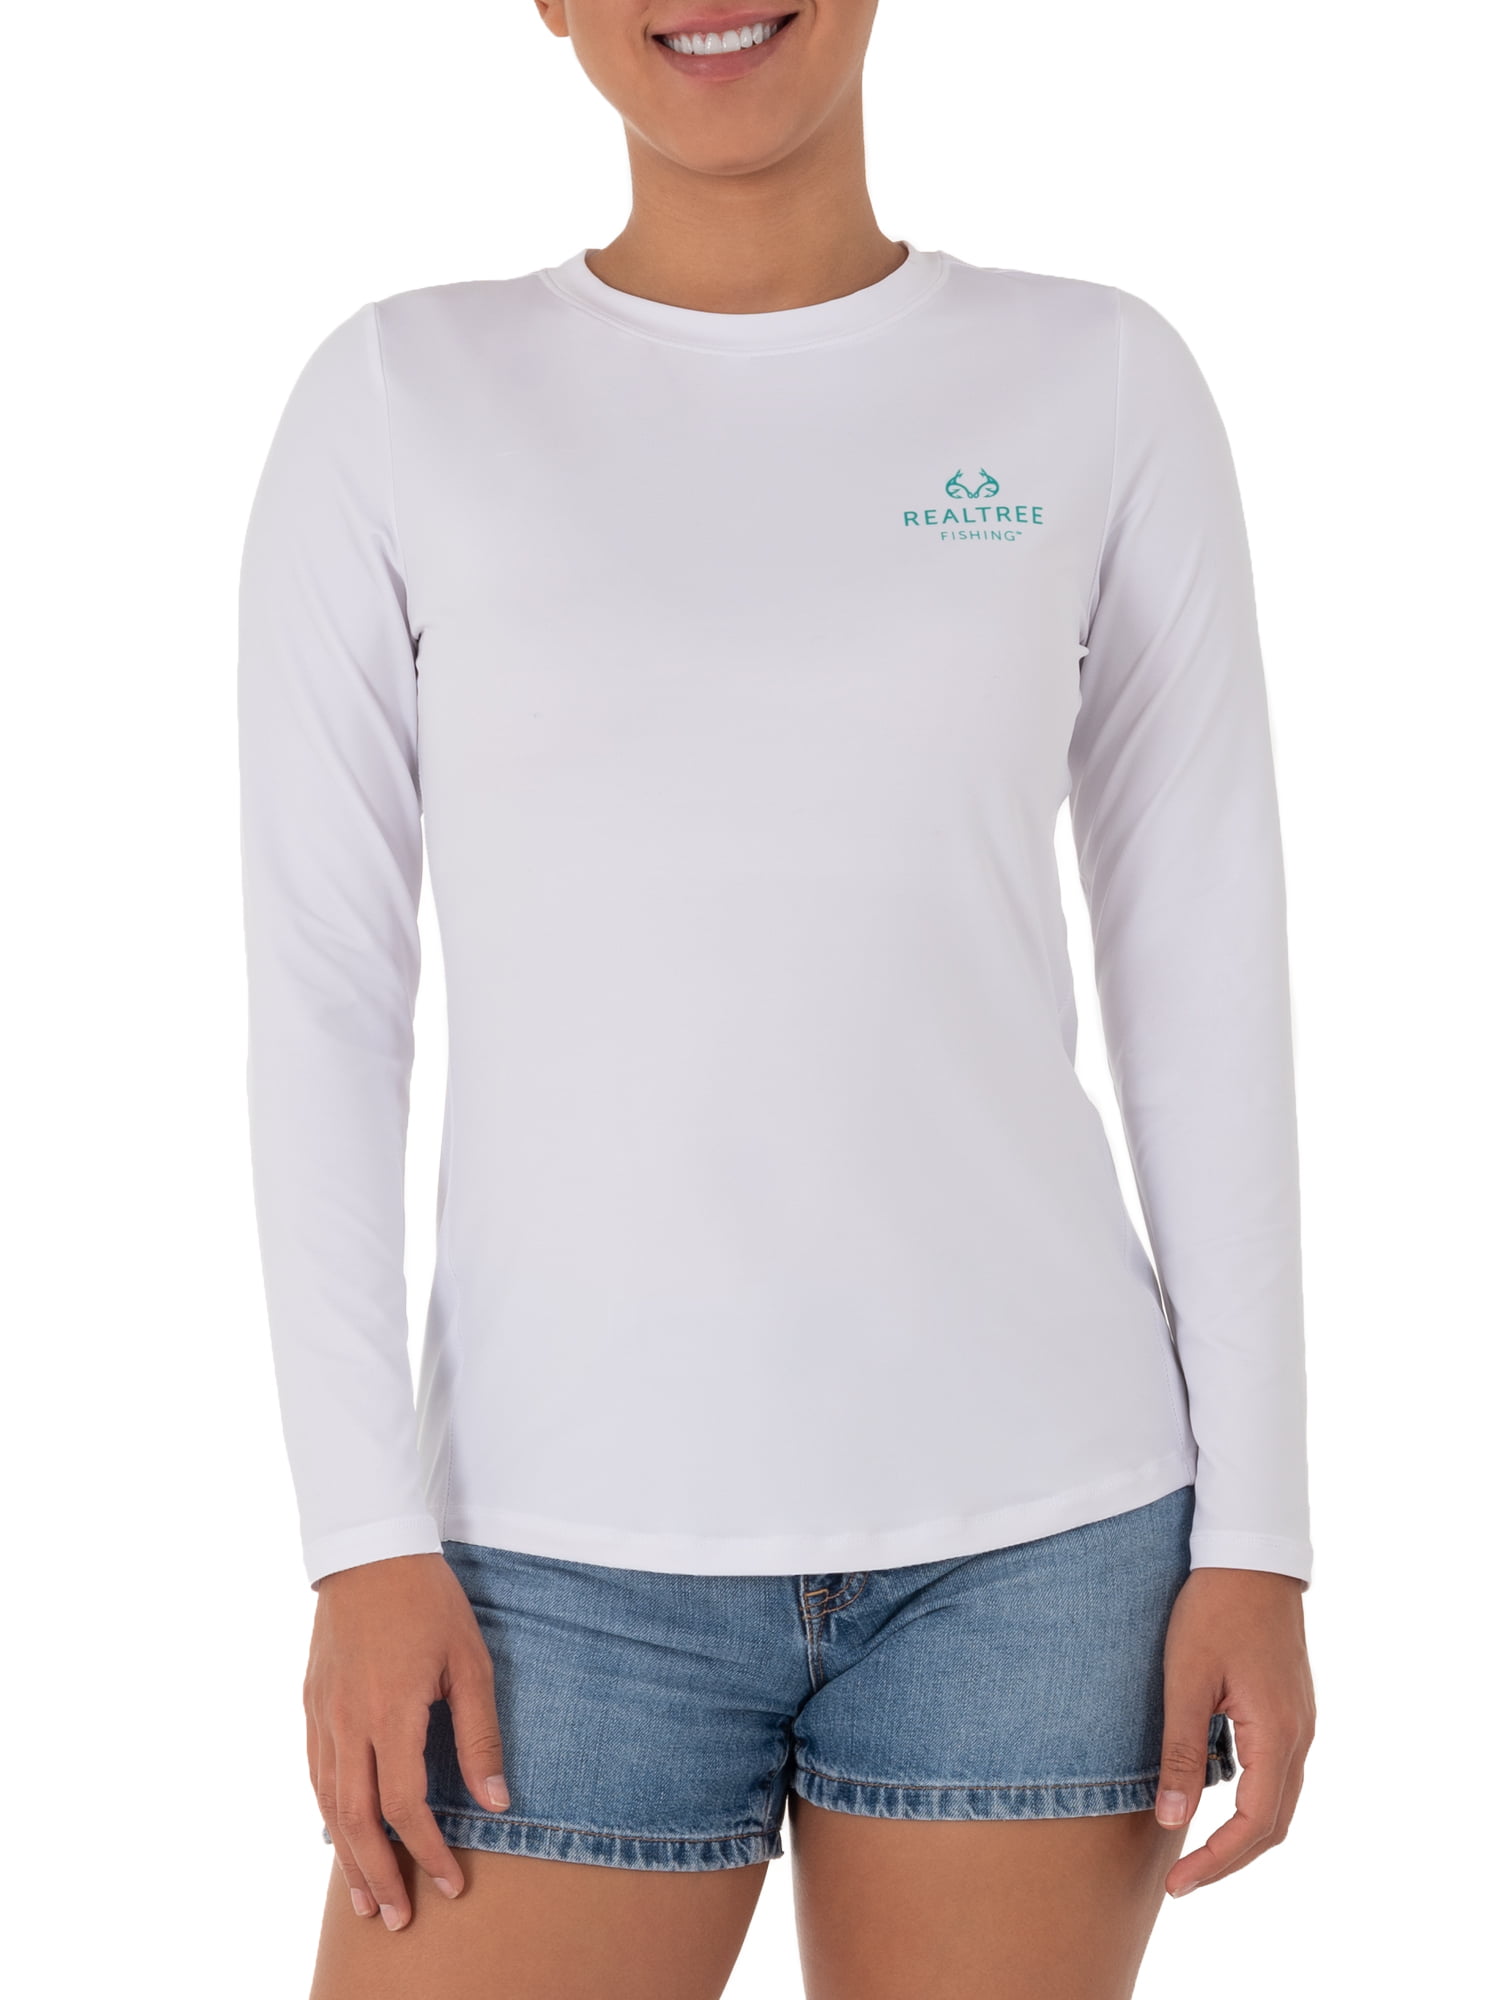 Realtree Fishing Women's Performance White Long Sleeve Shirt, Size: 2XL